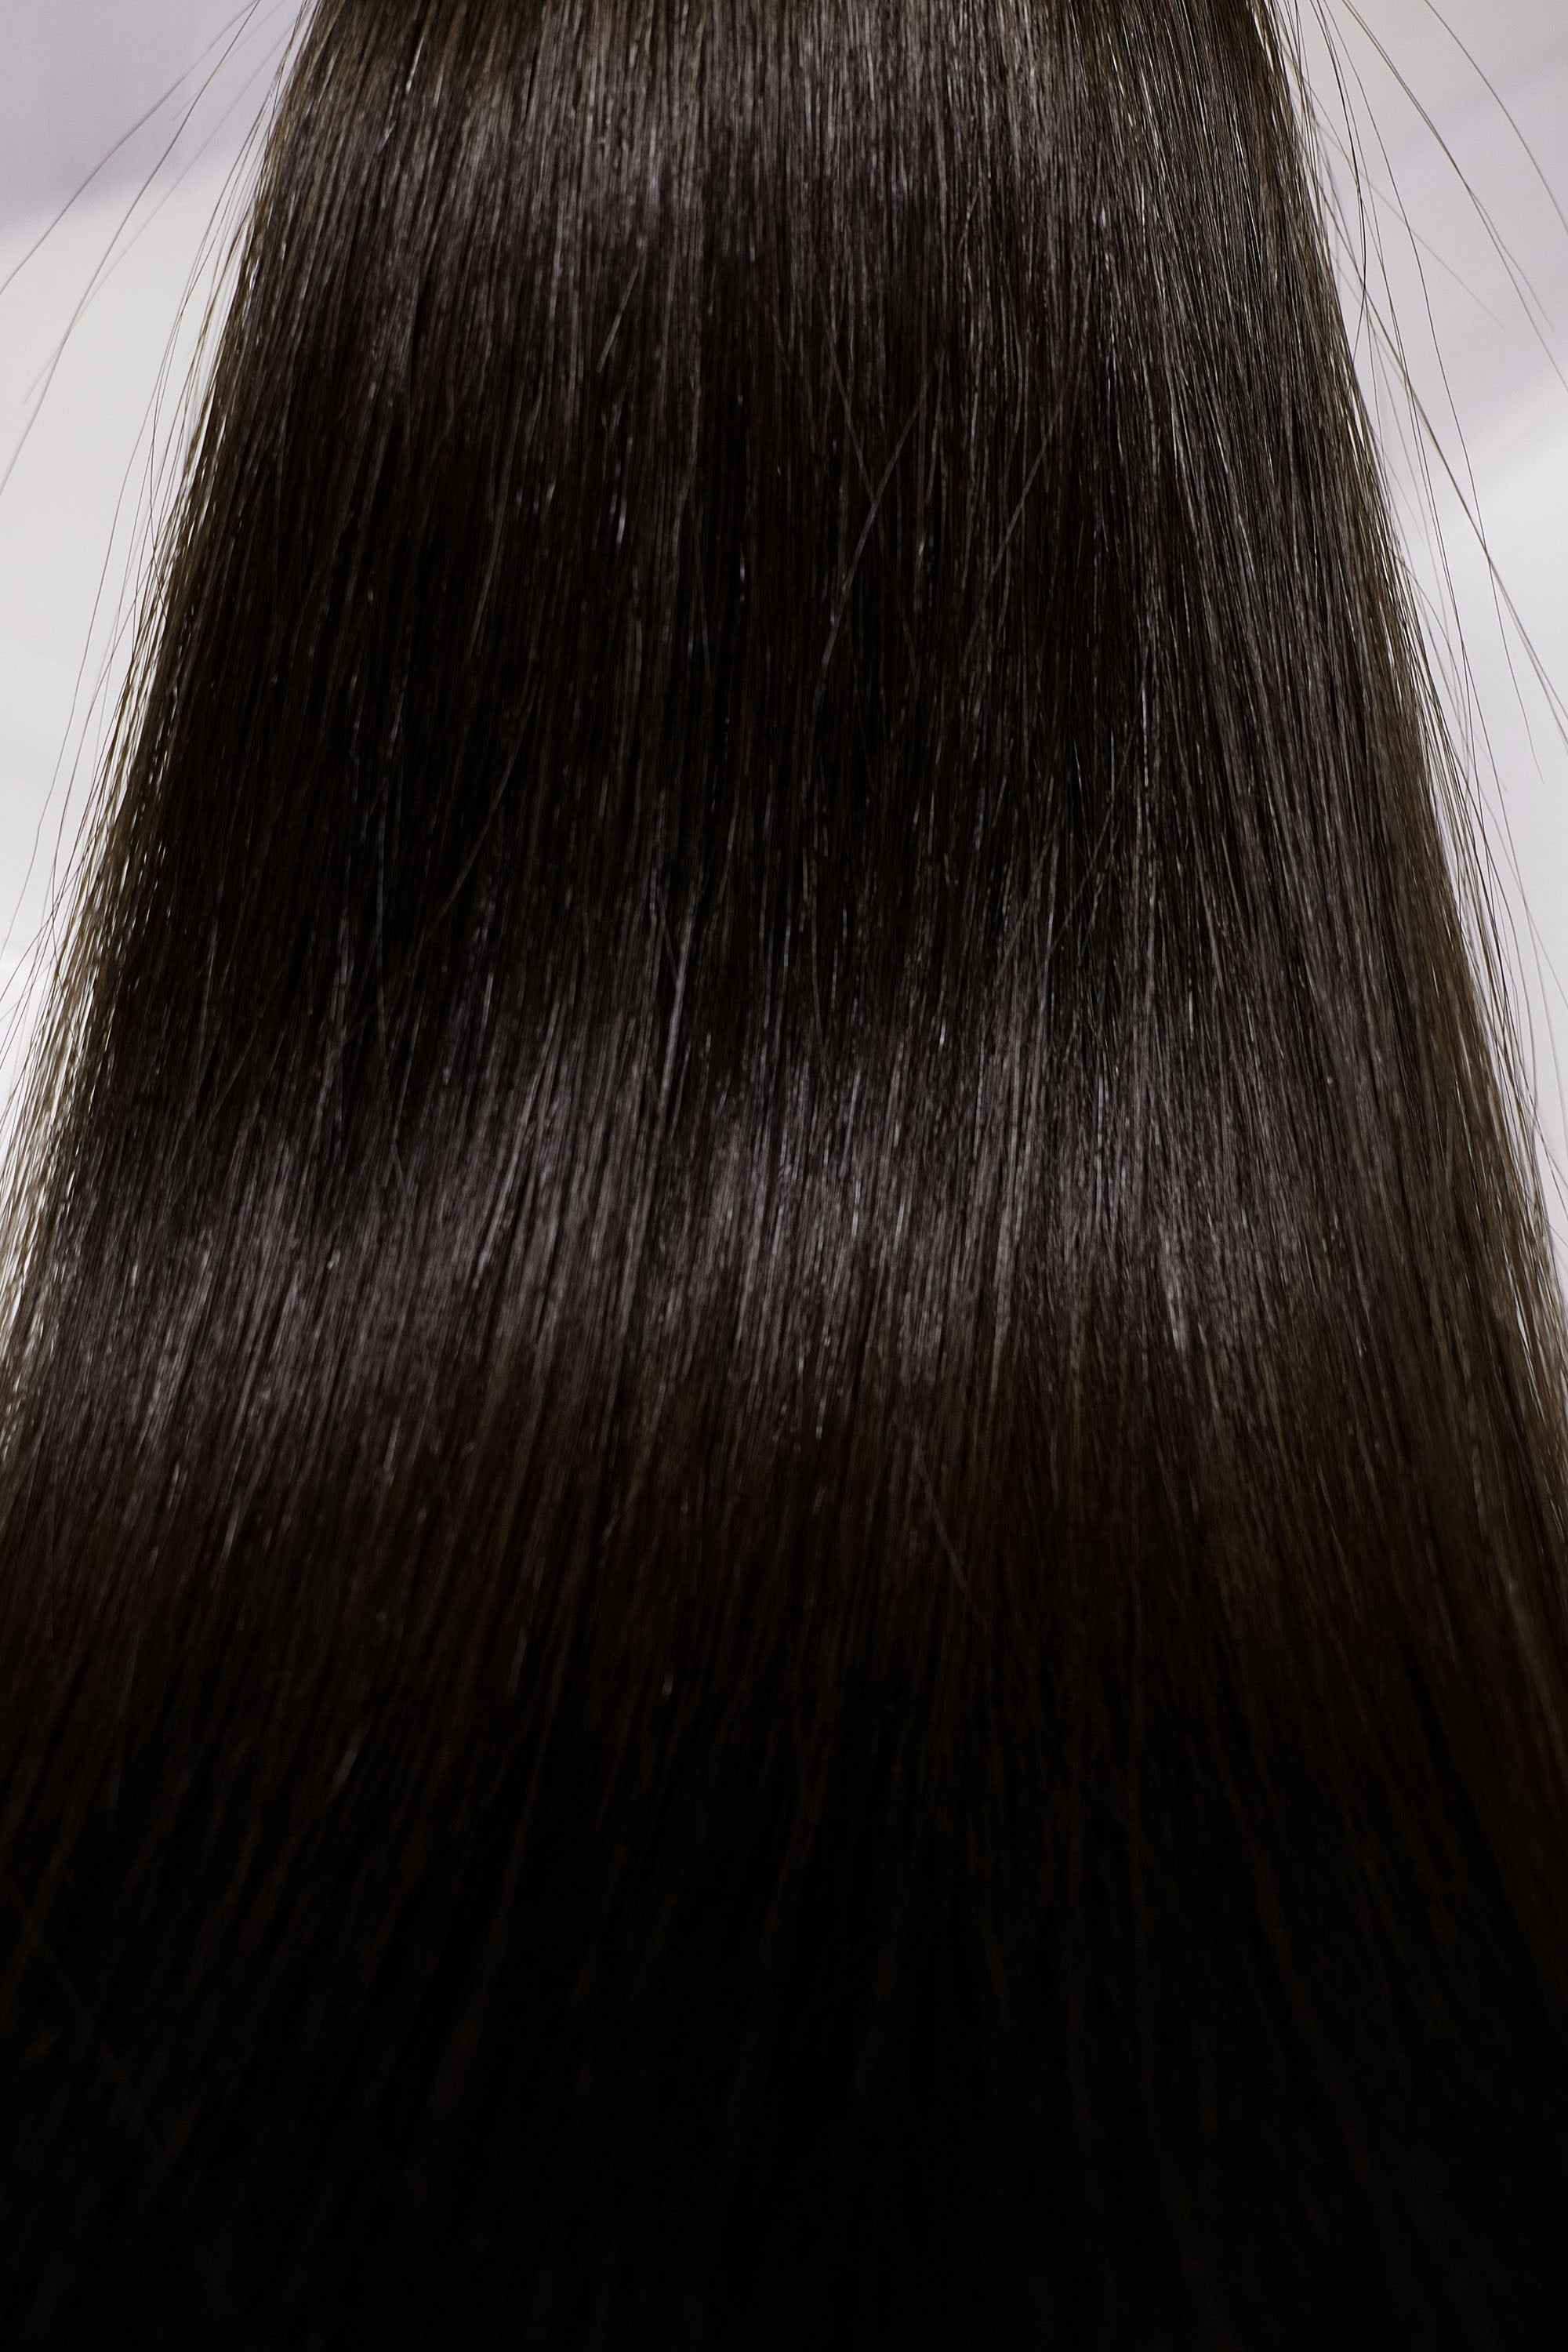 Behair professional Keratin Tip "Premium" 28" (70cm) Natural Straight Natural Black #1B - 25g (Standart - 0.7g each pcs) hair extensions